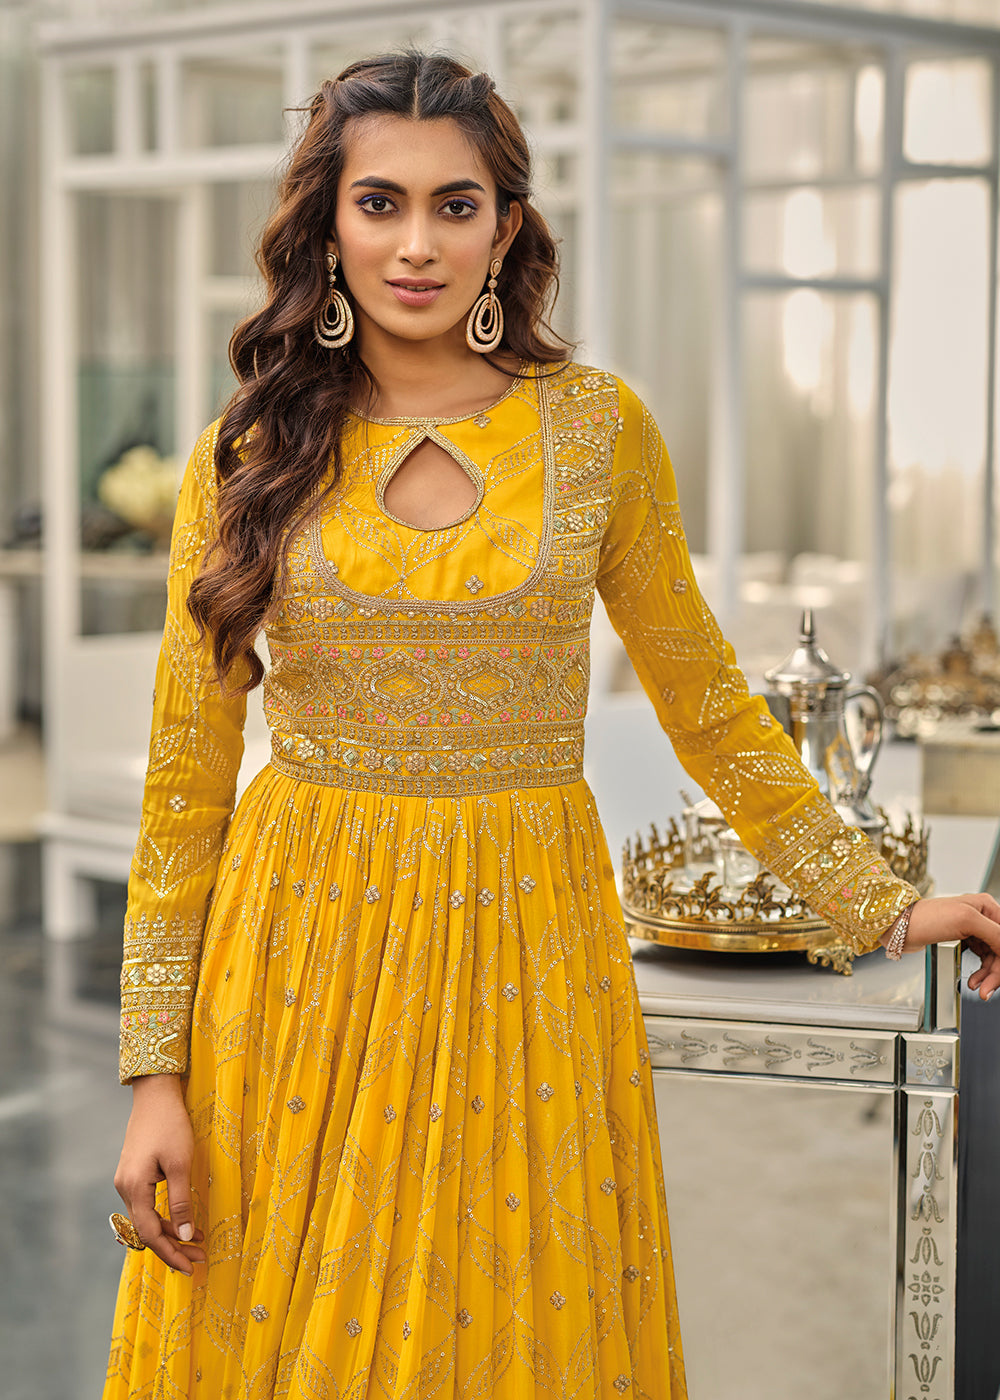 Buy Now Mustard Haldi Wedding Party Wear Long Anarkali Gown Online in USA, UK, Australia, New Zealand, Canada & Worldwide at Empress Clothing.